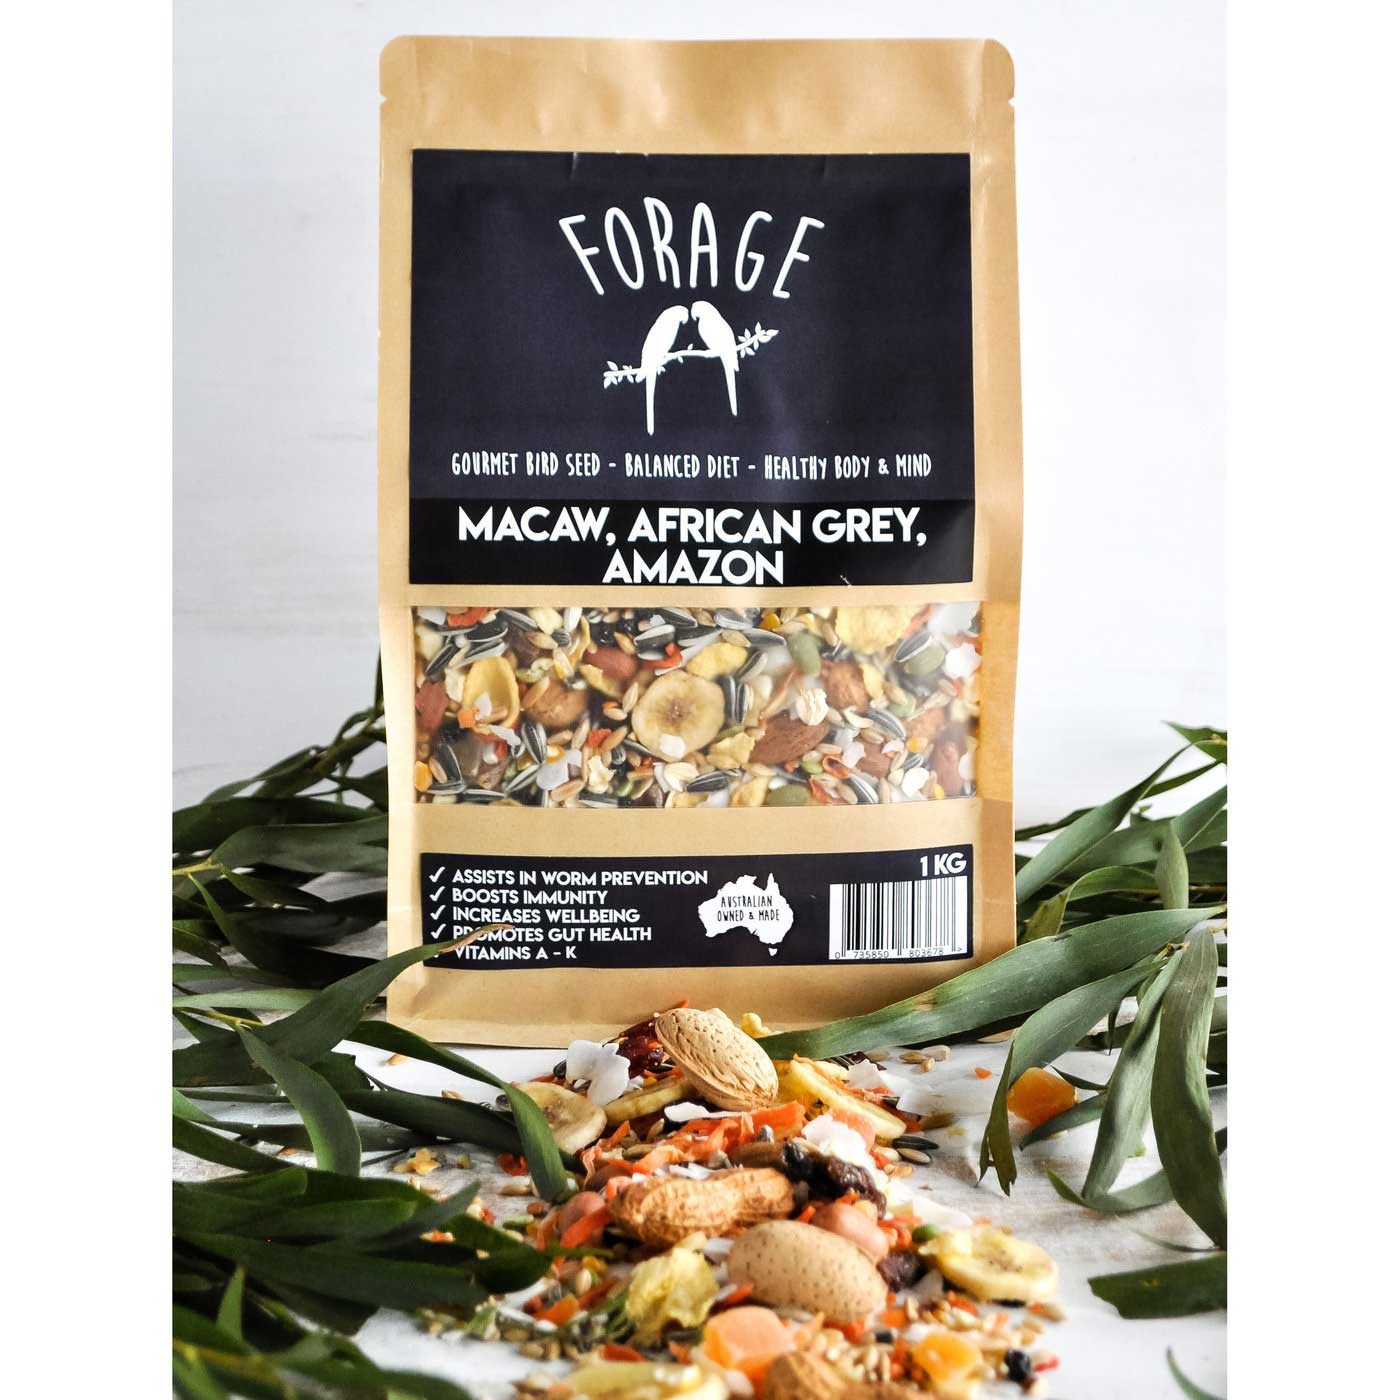 Forage Gourmet Macaw, African Grey & Amazon Food